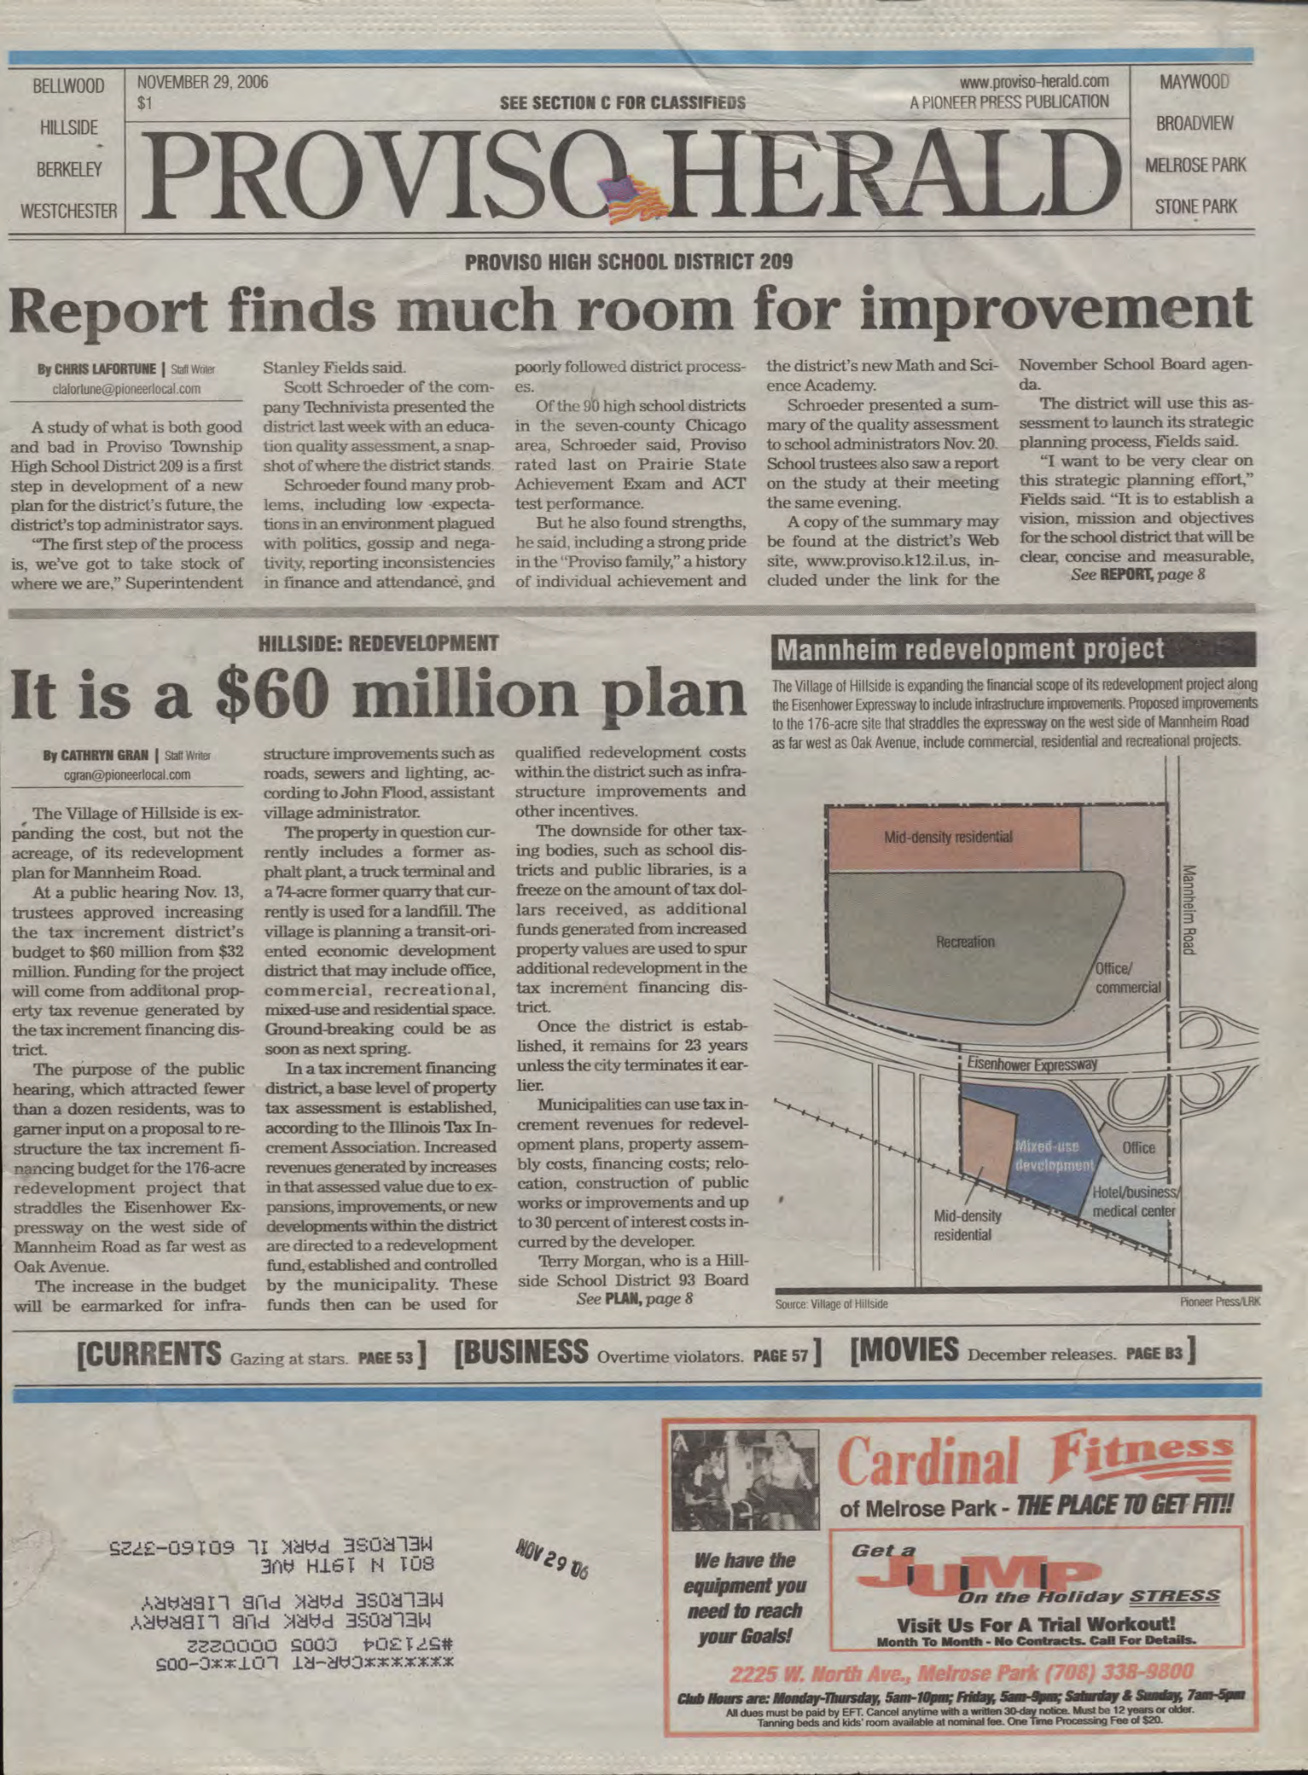 The Herald – 20061129